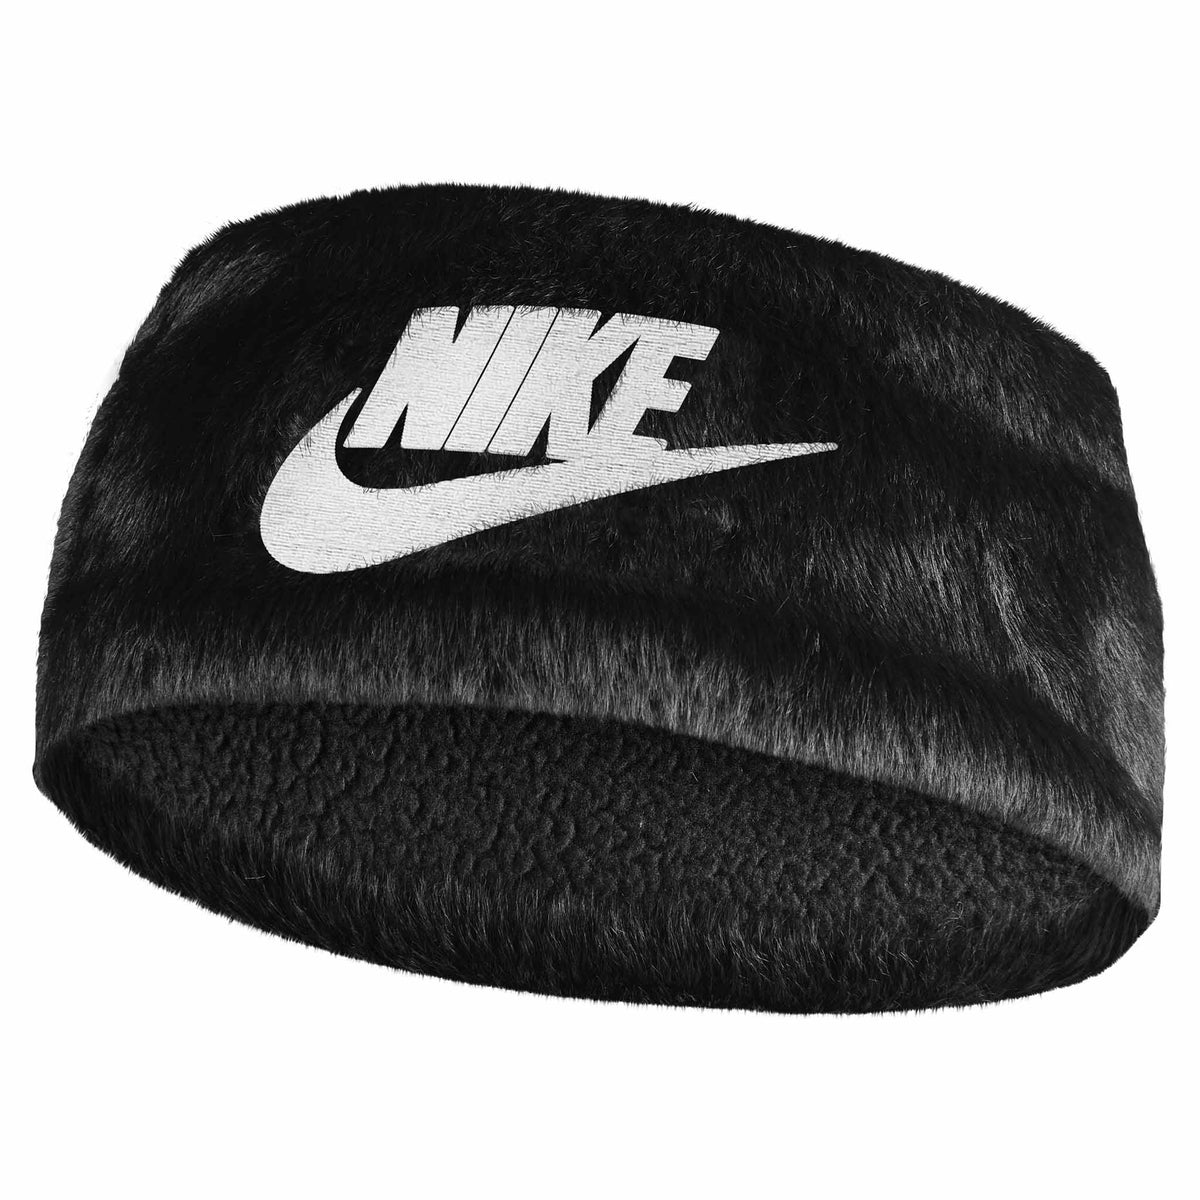 Nike Warm Headband bandeau sport - Black / White